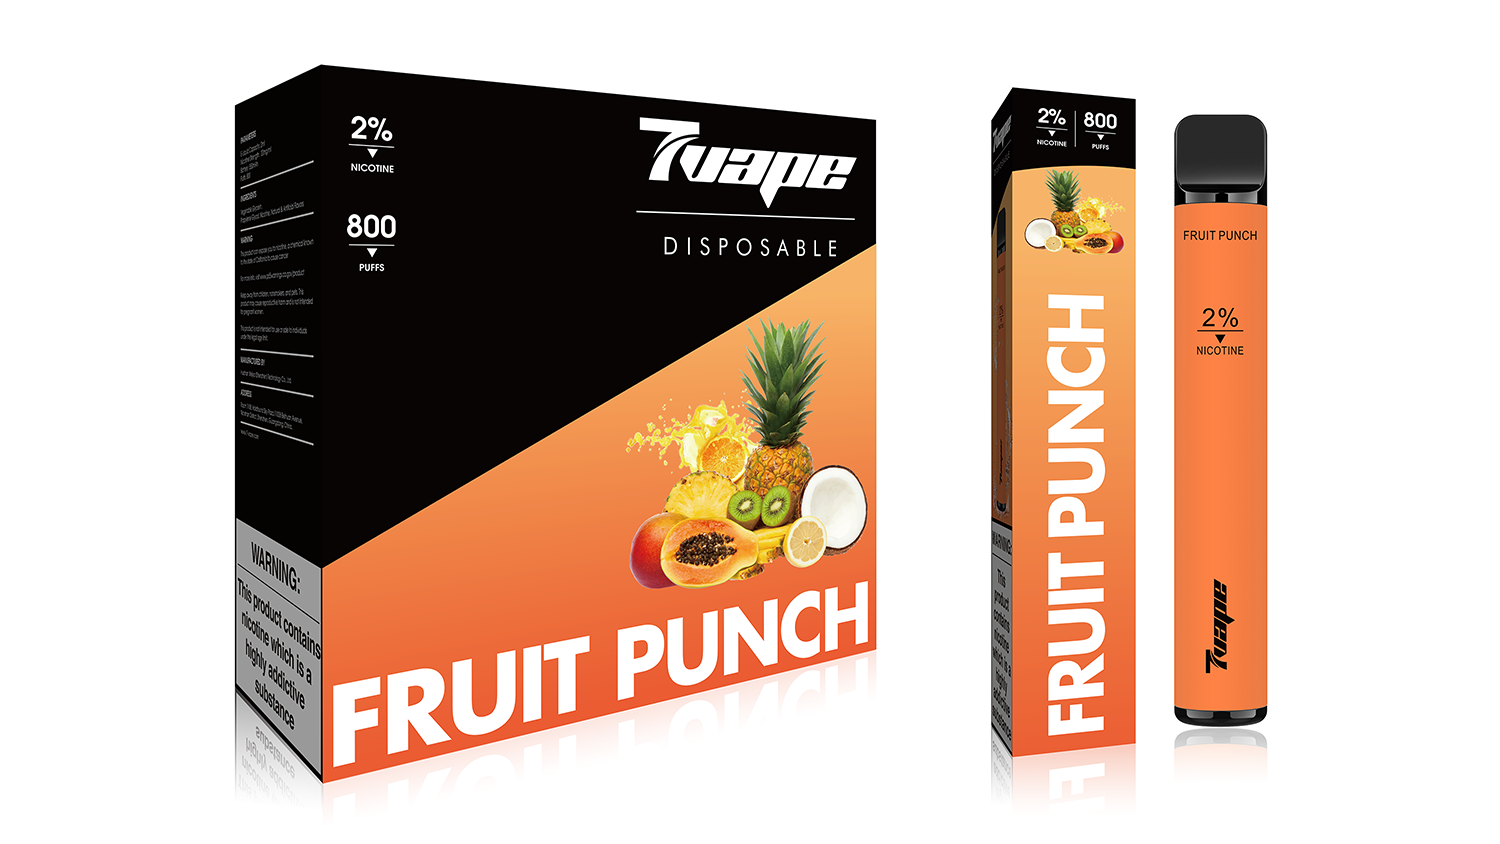 7VAPE disposable vape, fruit punch vape, 800 puffs, 2% nicotine, 7-VAPE BAR